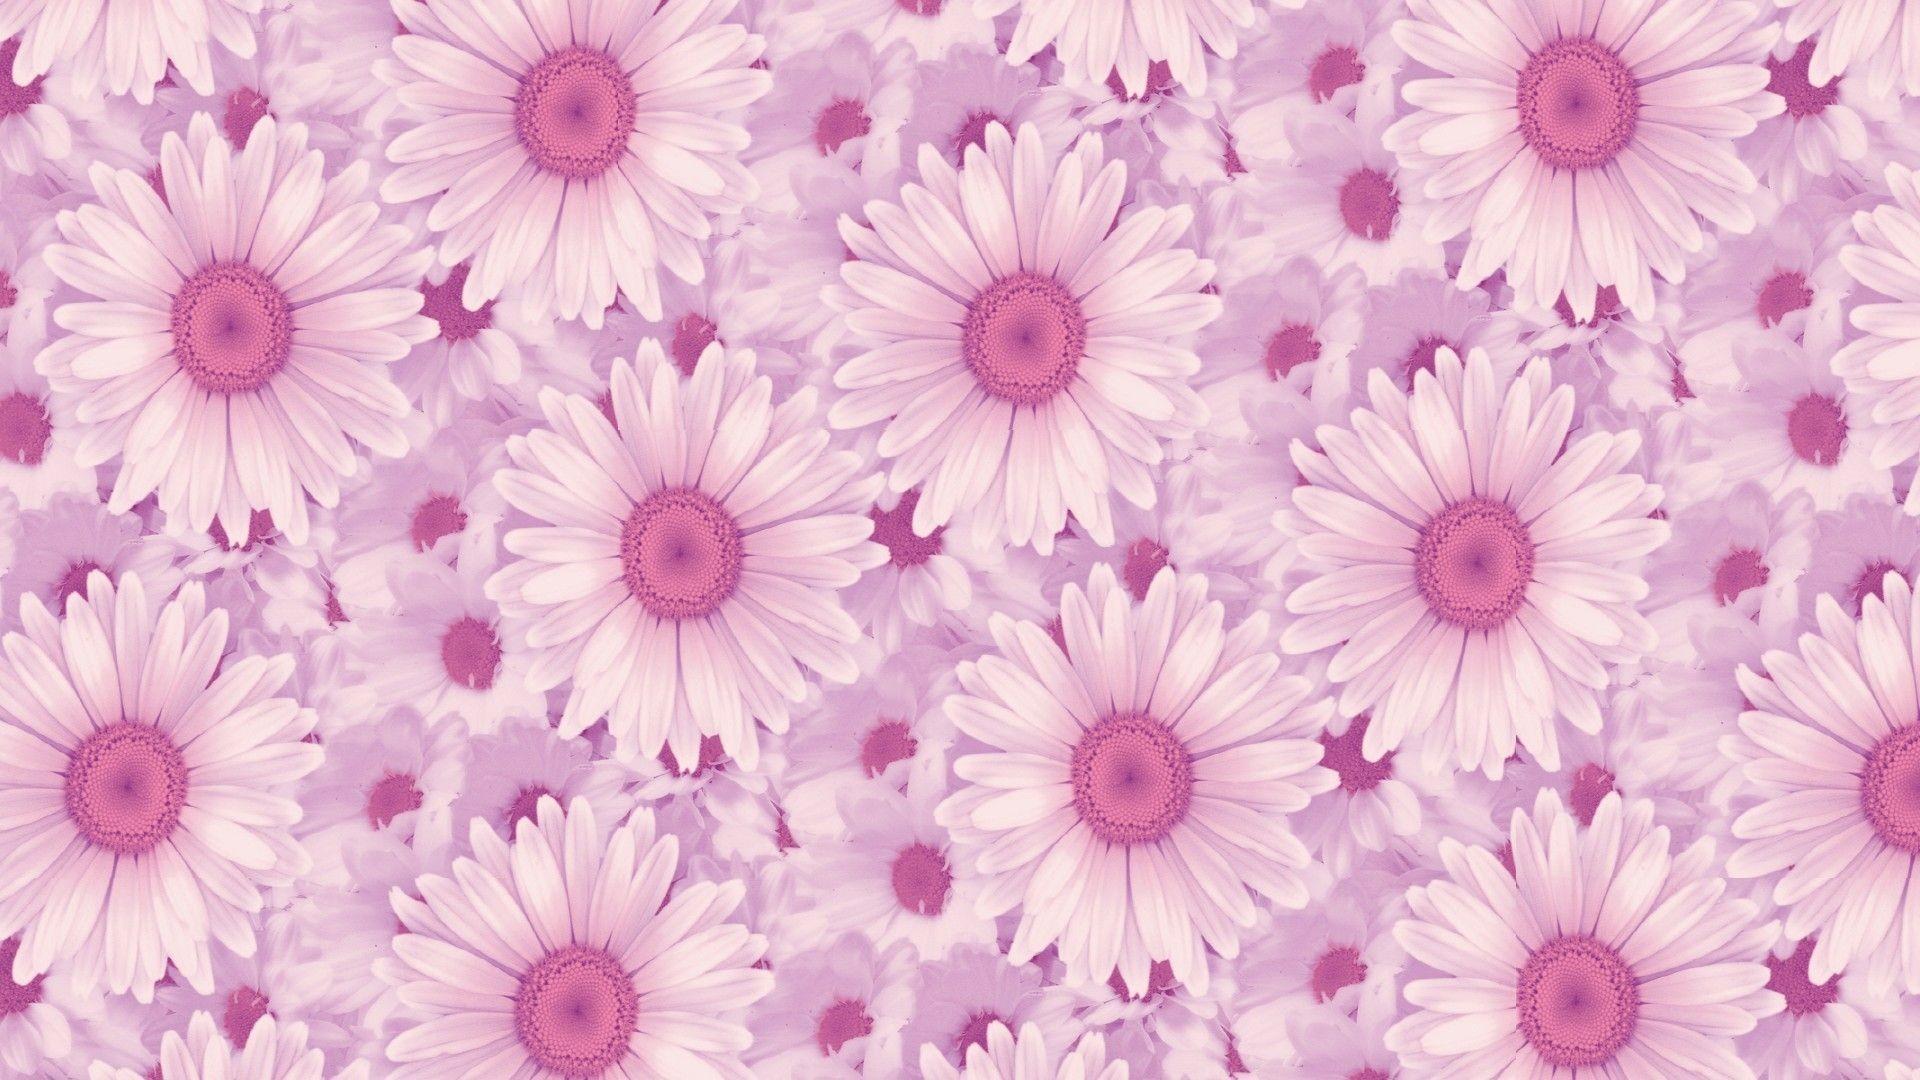 45 Pink Wallpapers HD download free  PixelsTalkNet